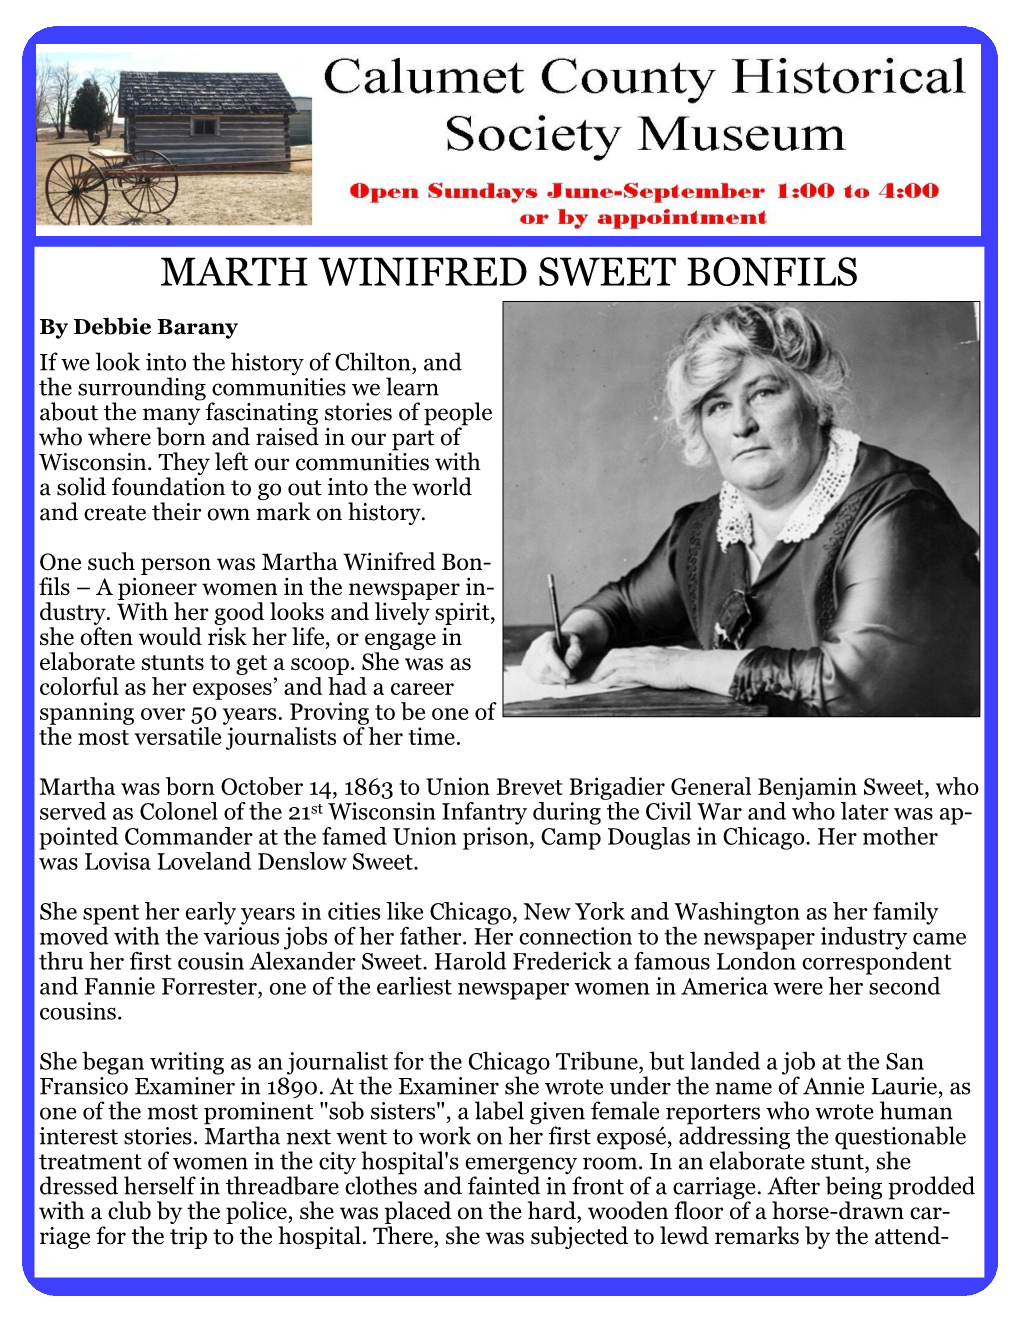 Marth Winifred Sweet Bonfils